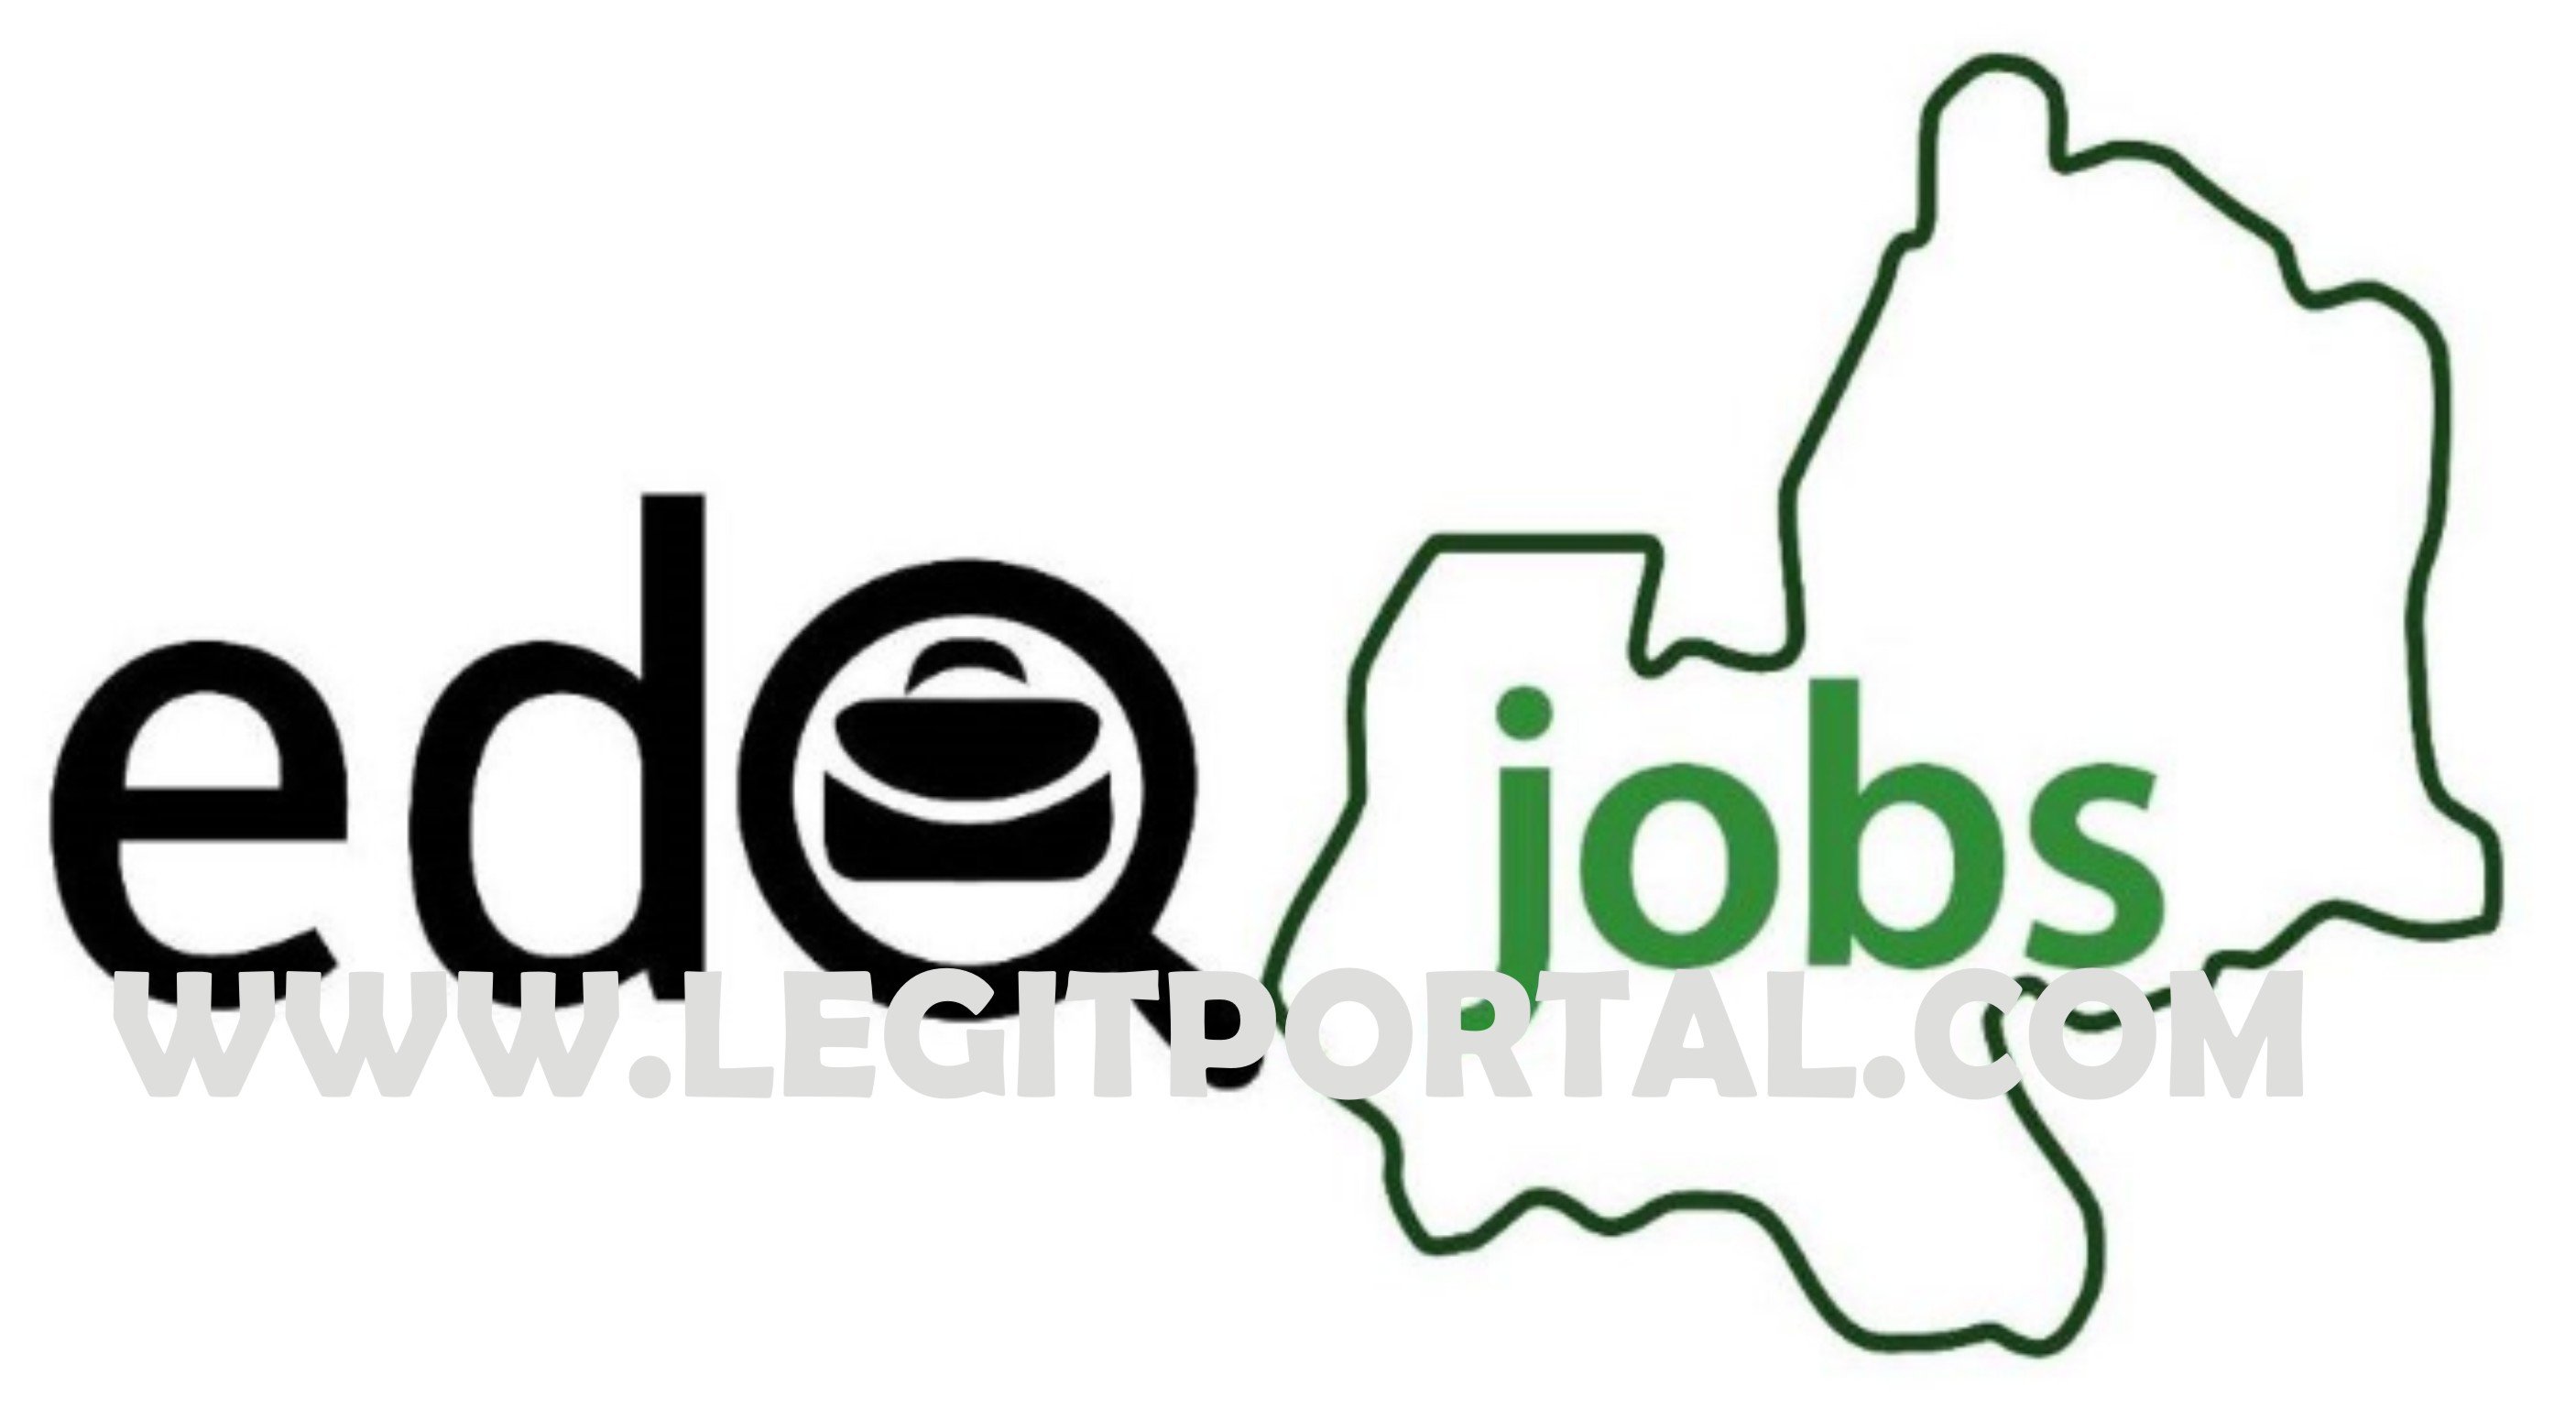 Edo State Government Jobs